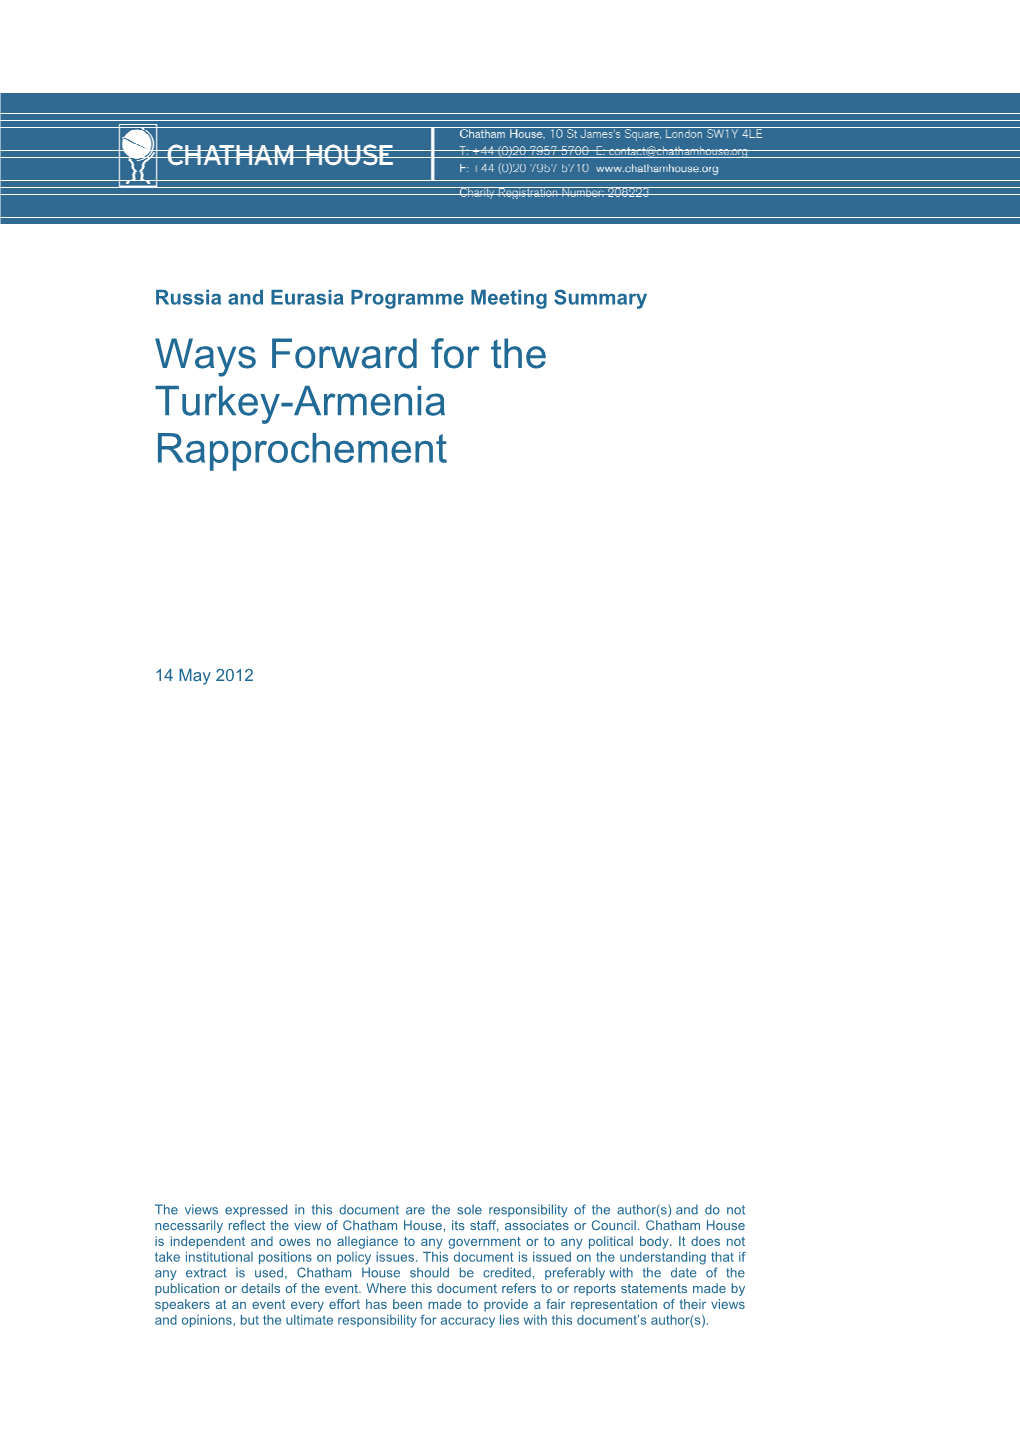 Ways Forward for the Turkey-Armenia Rapprochement